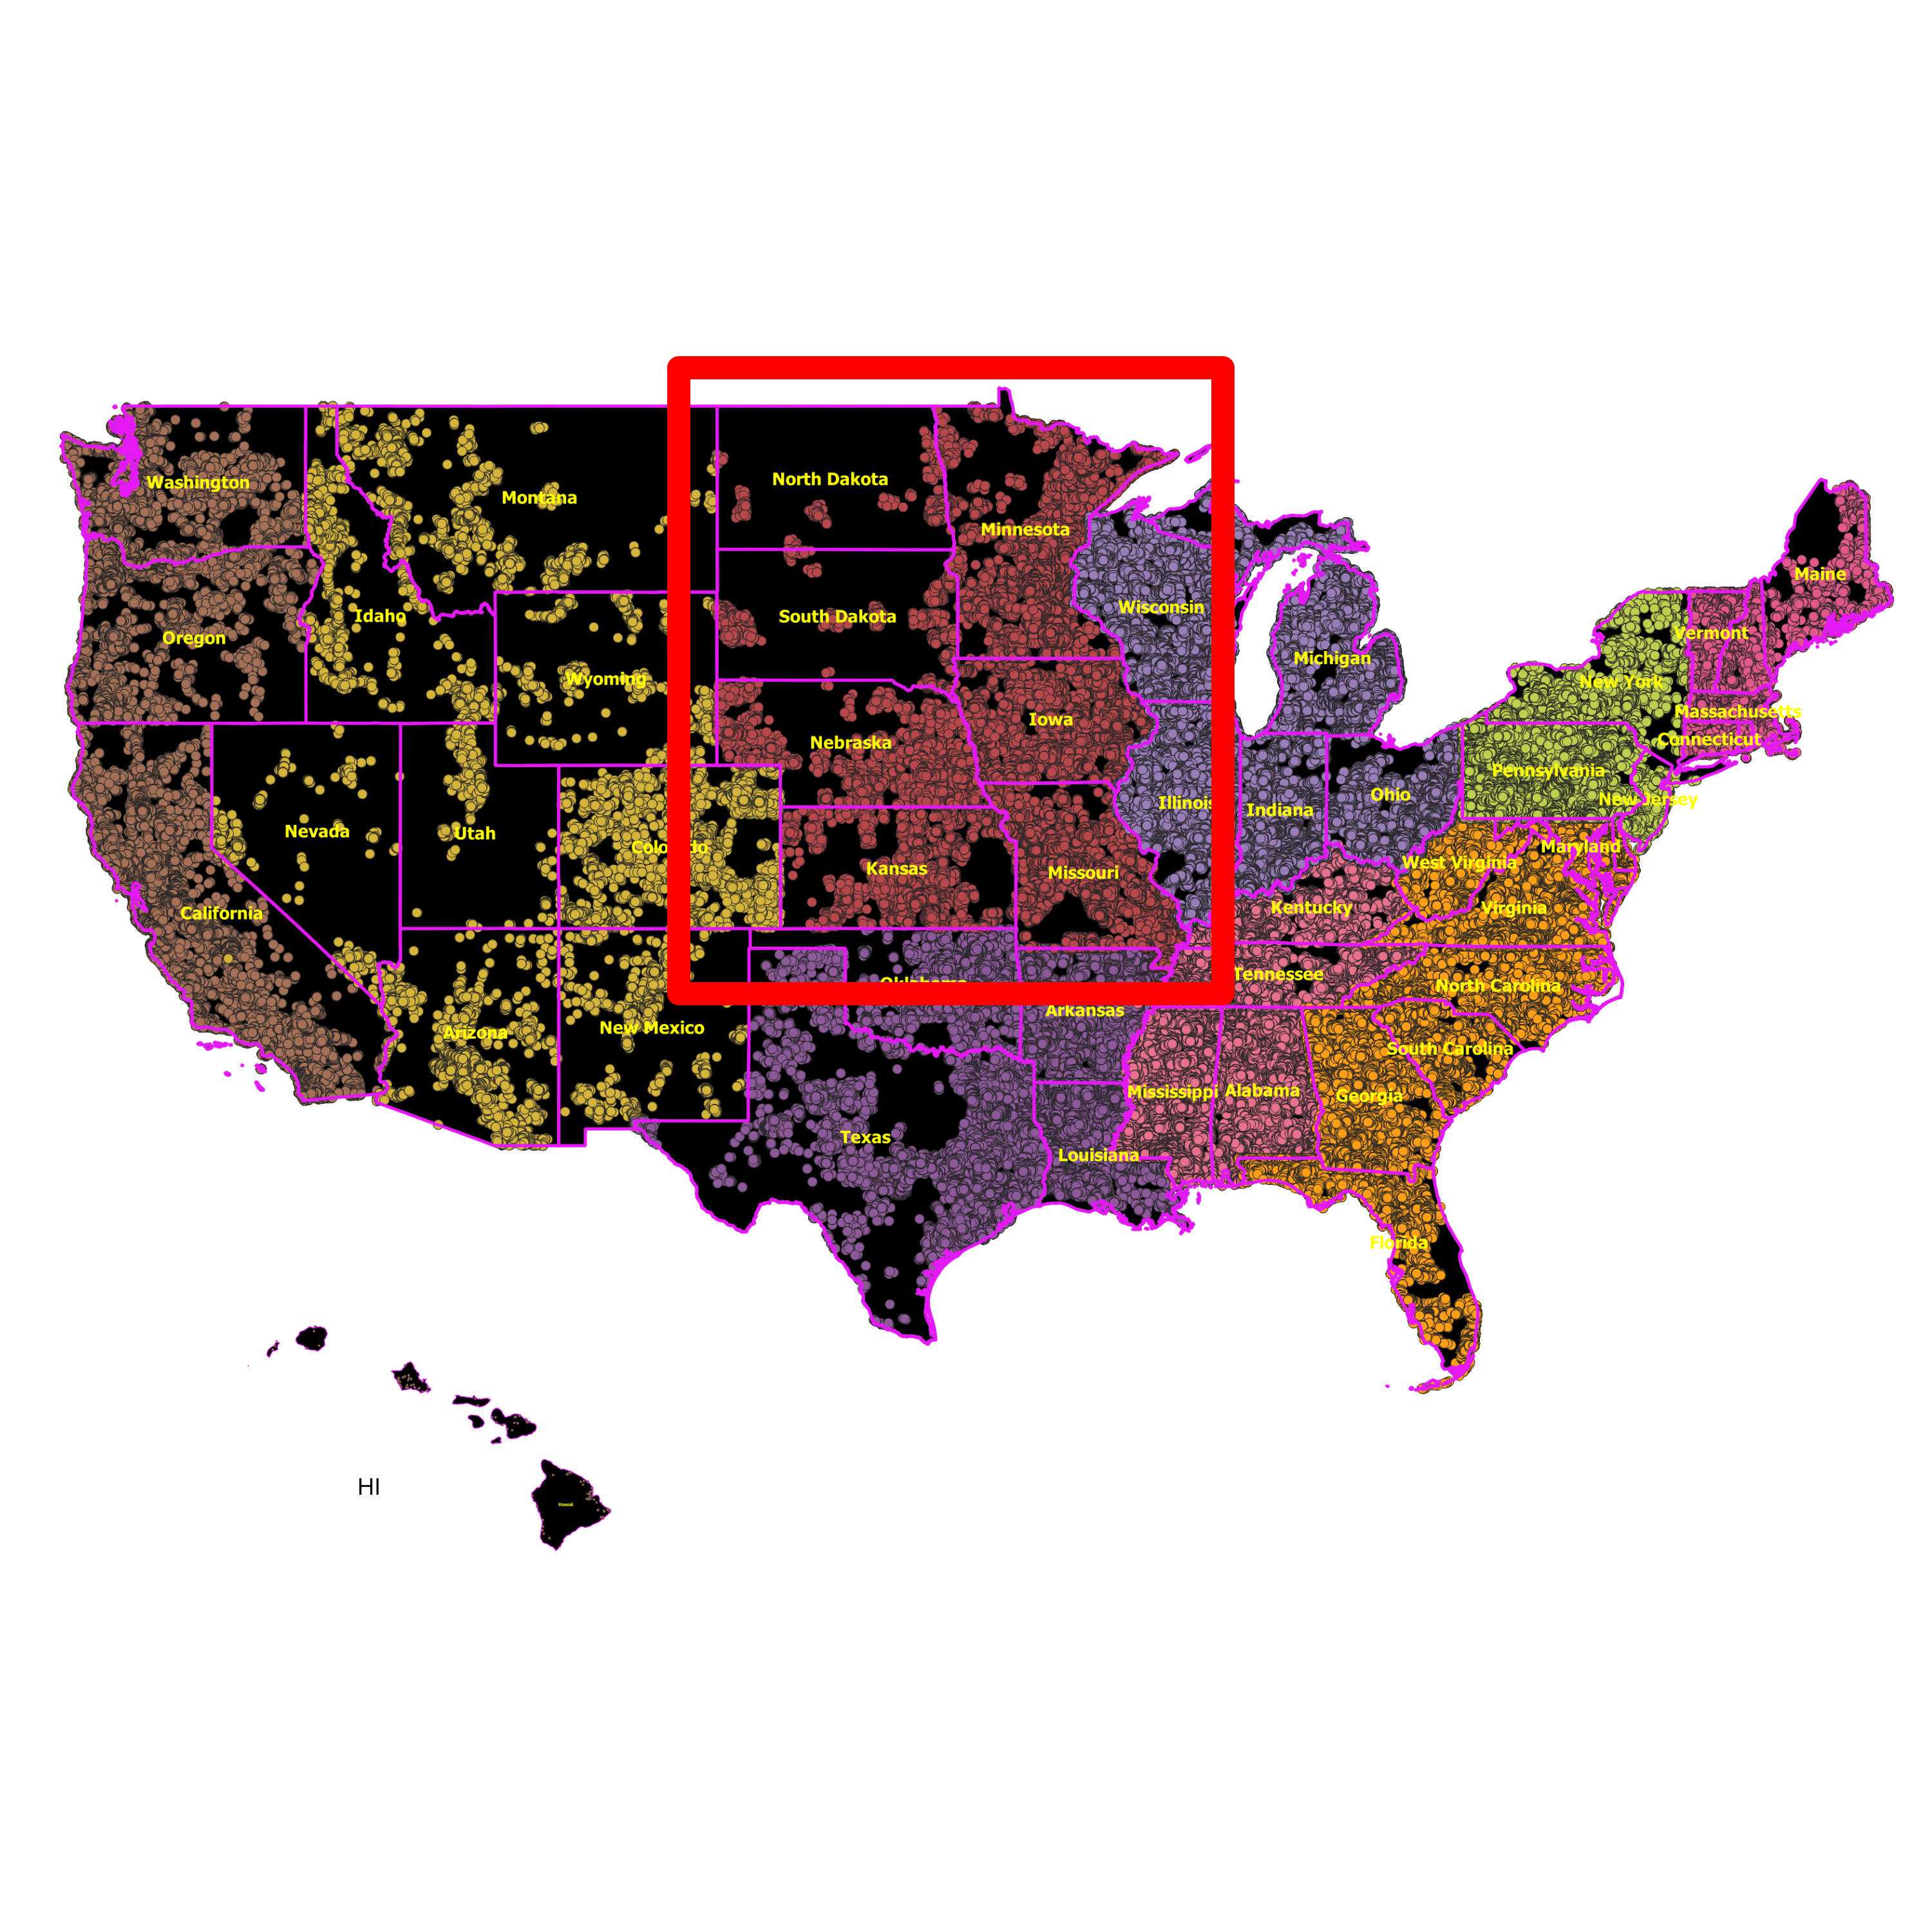 West North Central (IA, KS, MN, MO, NE, ND, SD) - RDOF Location Analyzer